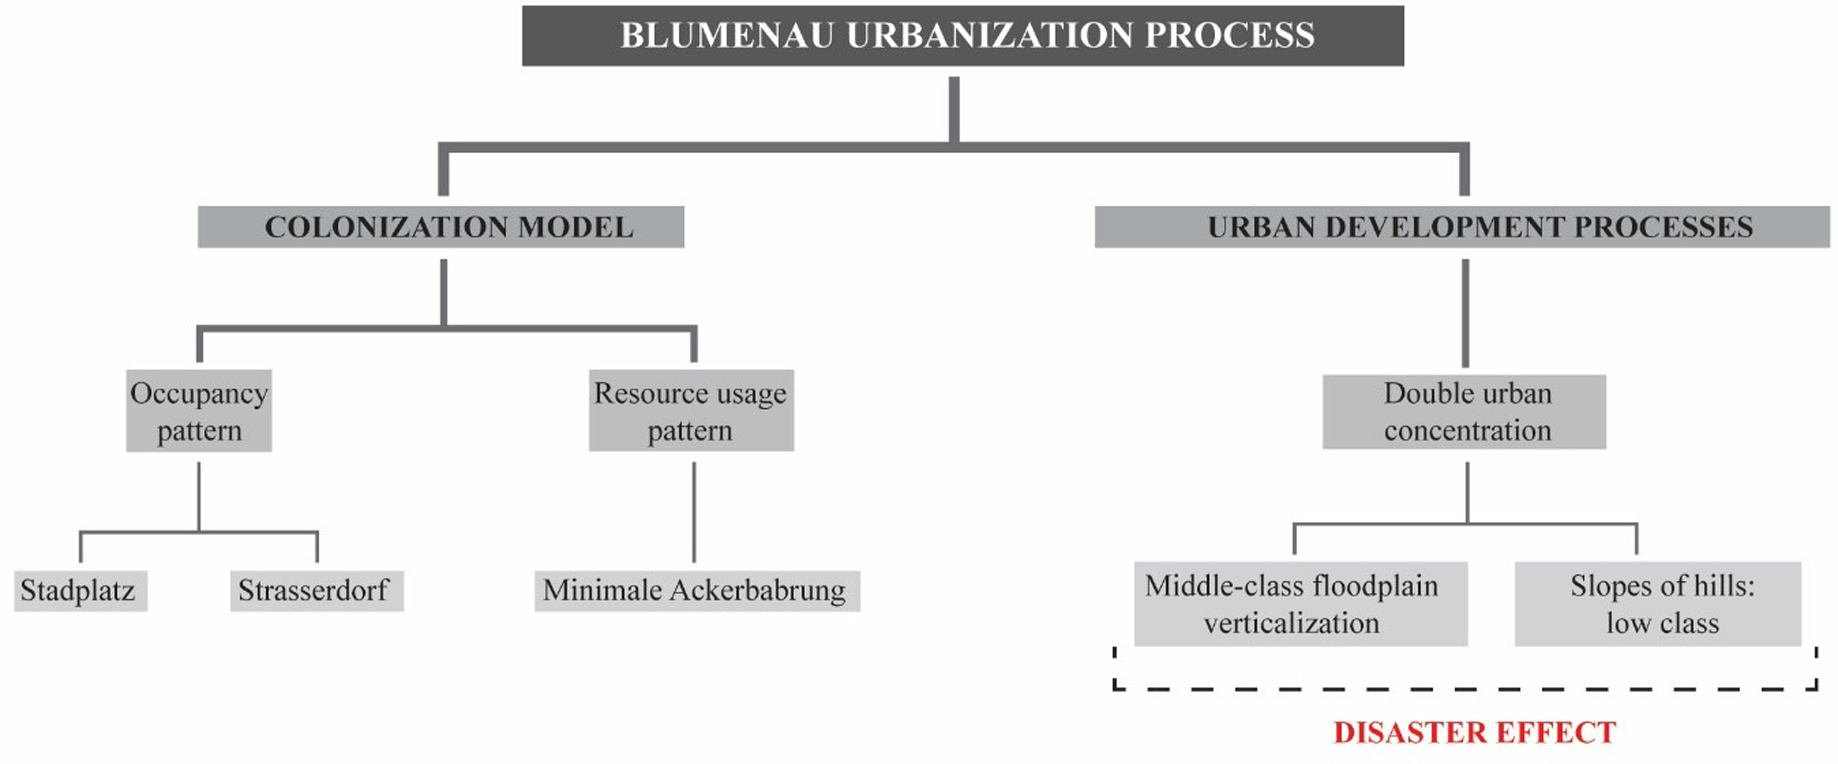 Blumenau urban development and the resulting models